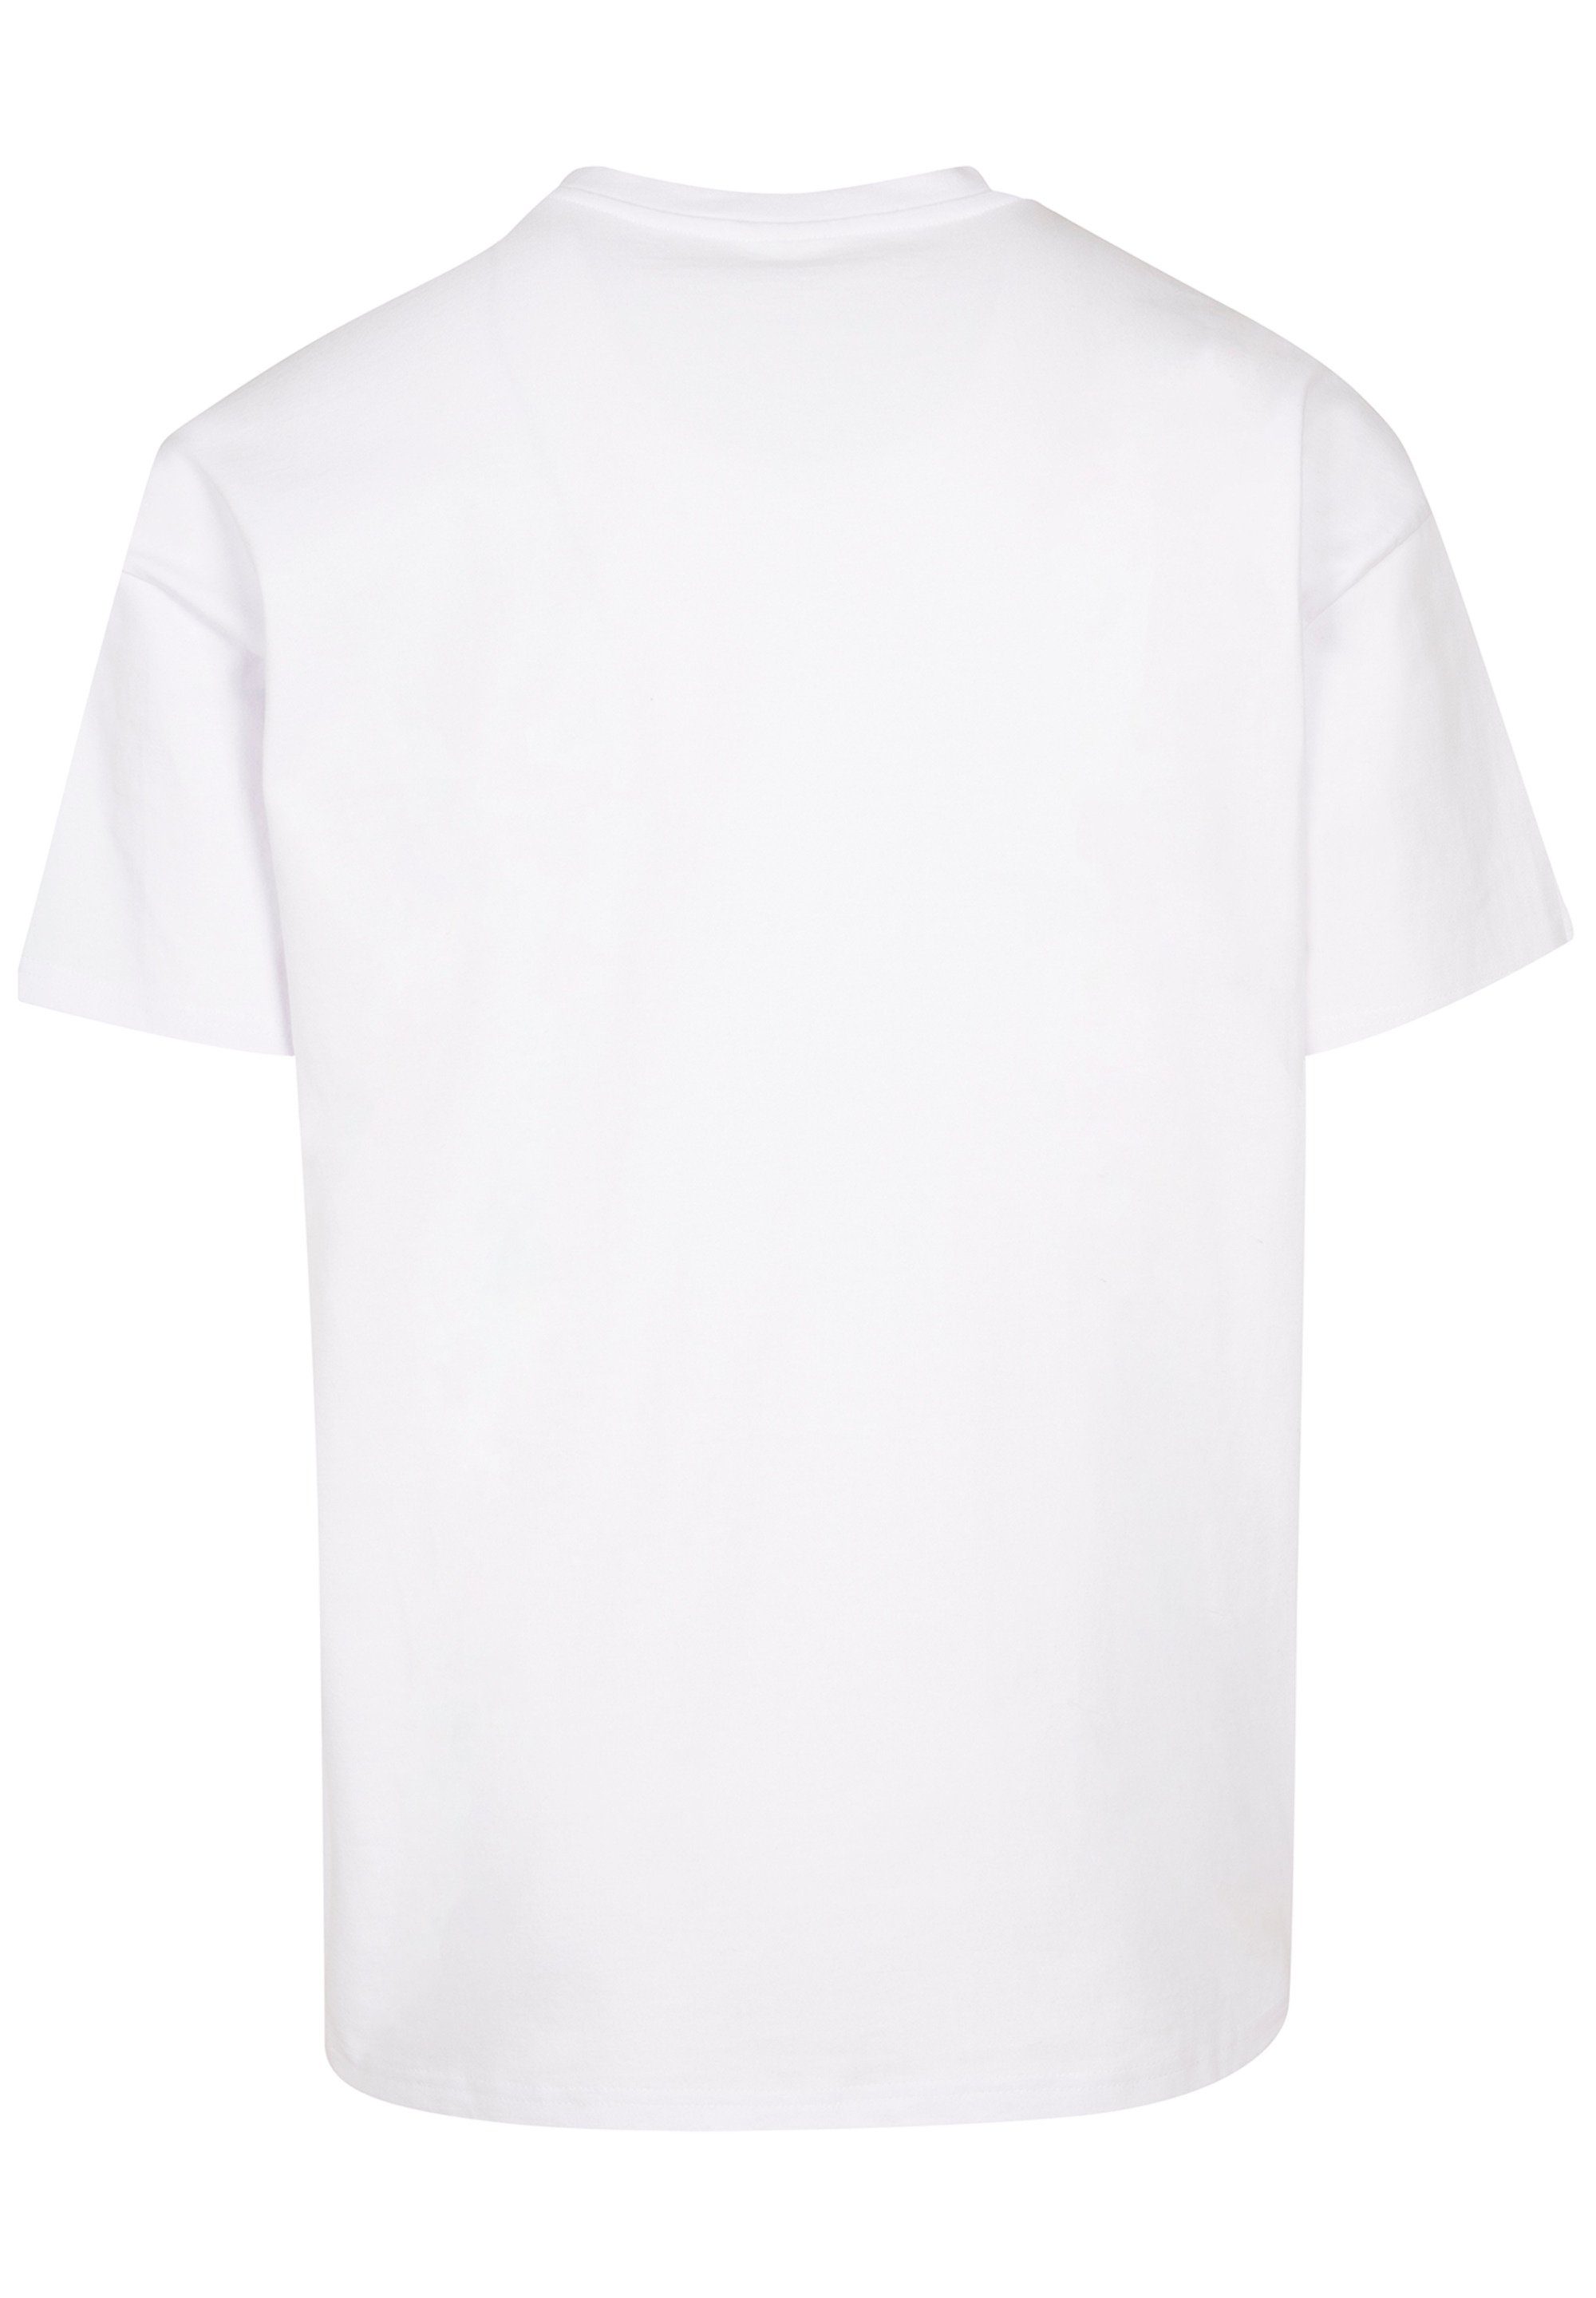 T T-Shirt Band F4NT4STIC Logo Black Drop weiß Beatles Print The